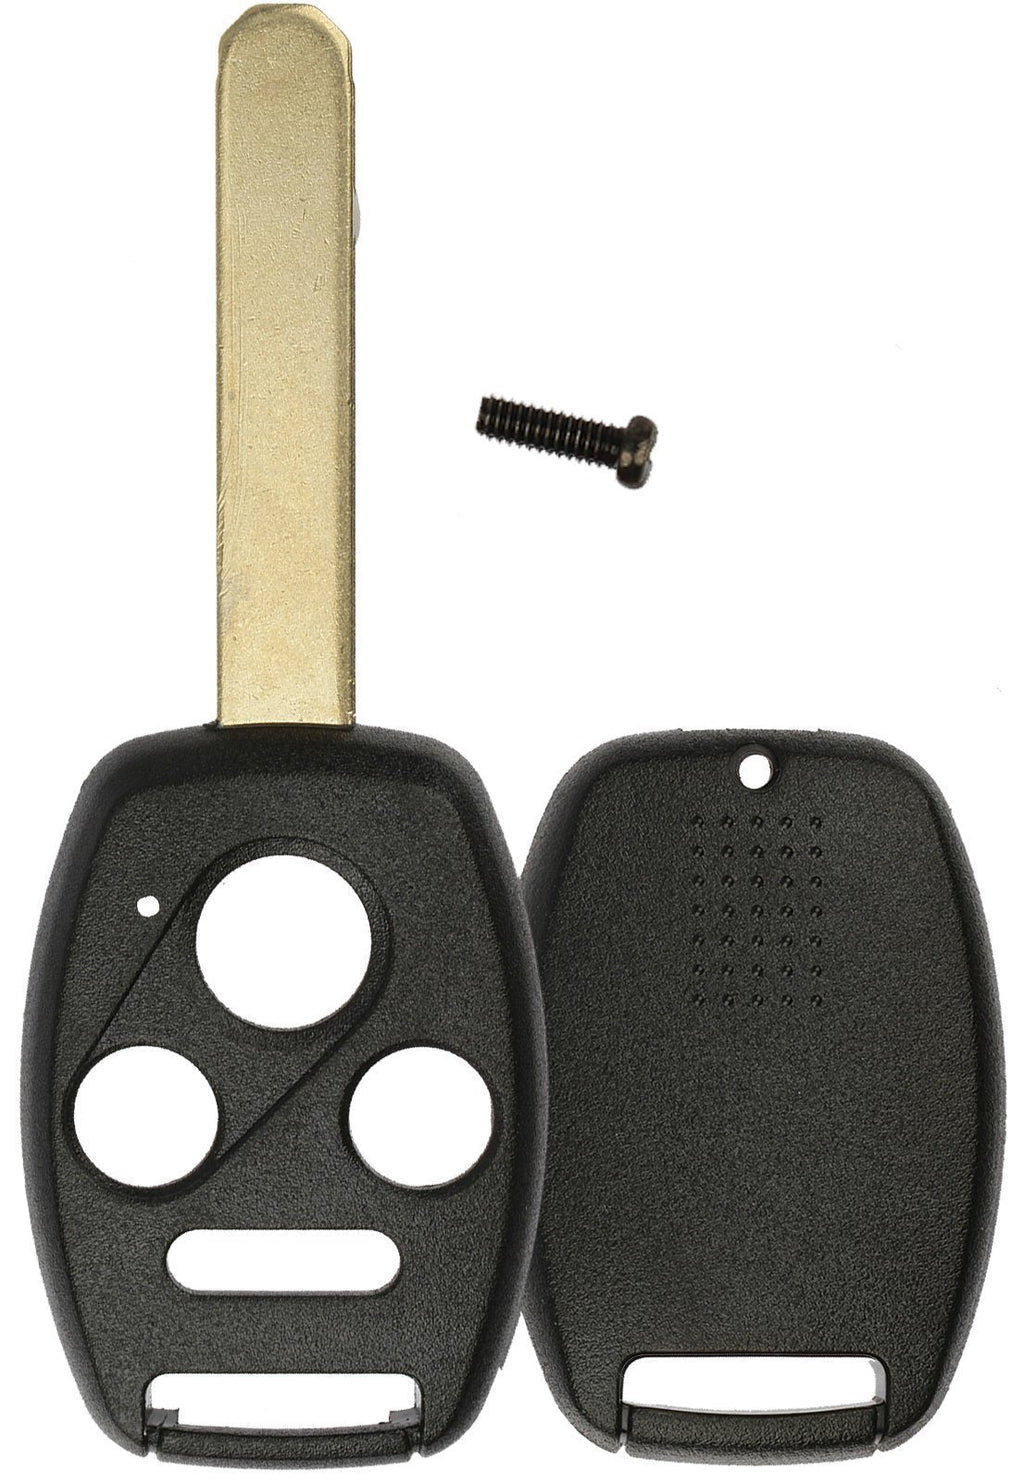  [AUSTRALIA] - KeylessOption Just the Case Keyless Entry Remote Head Key Combo Fob Shell Black